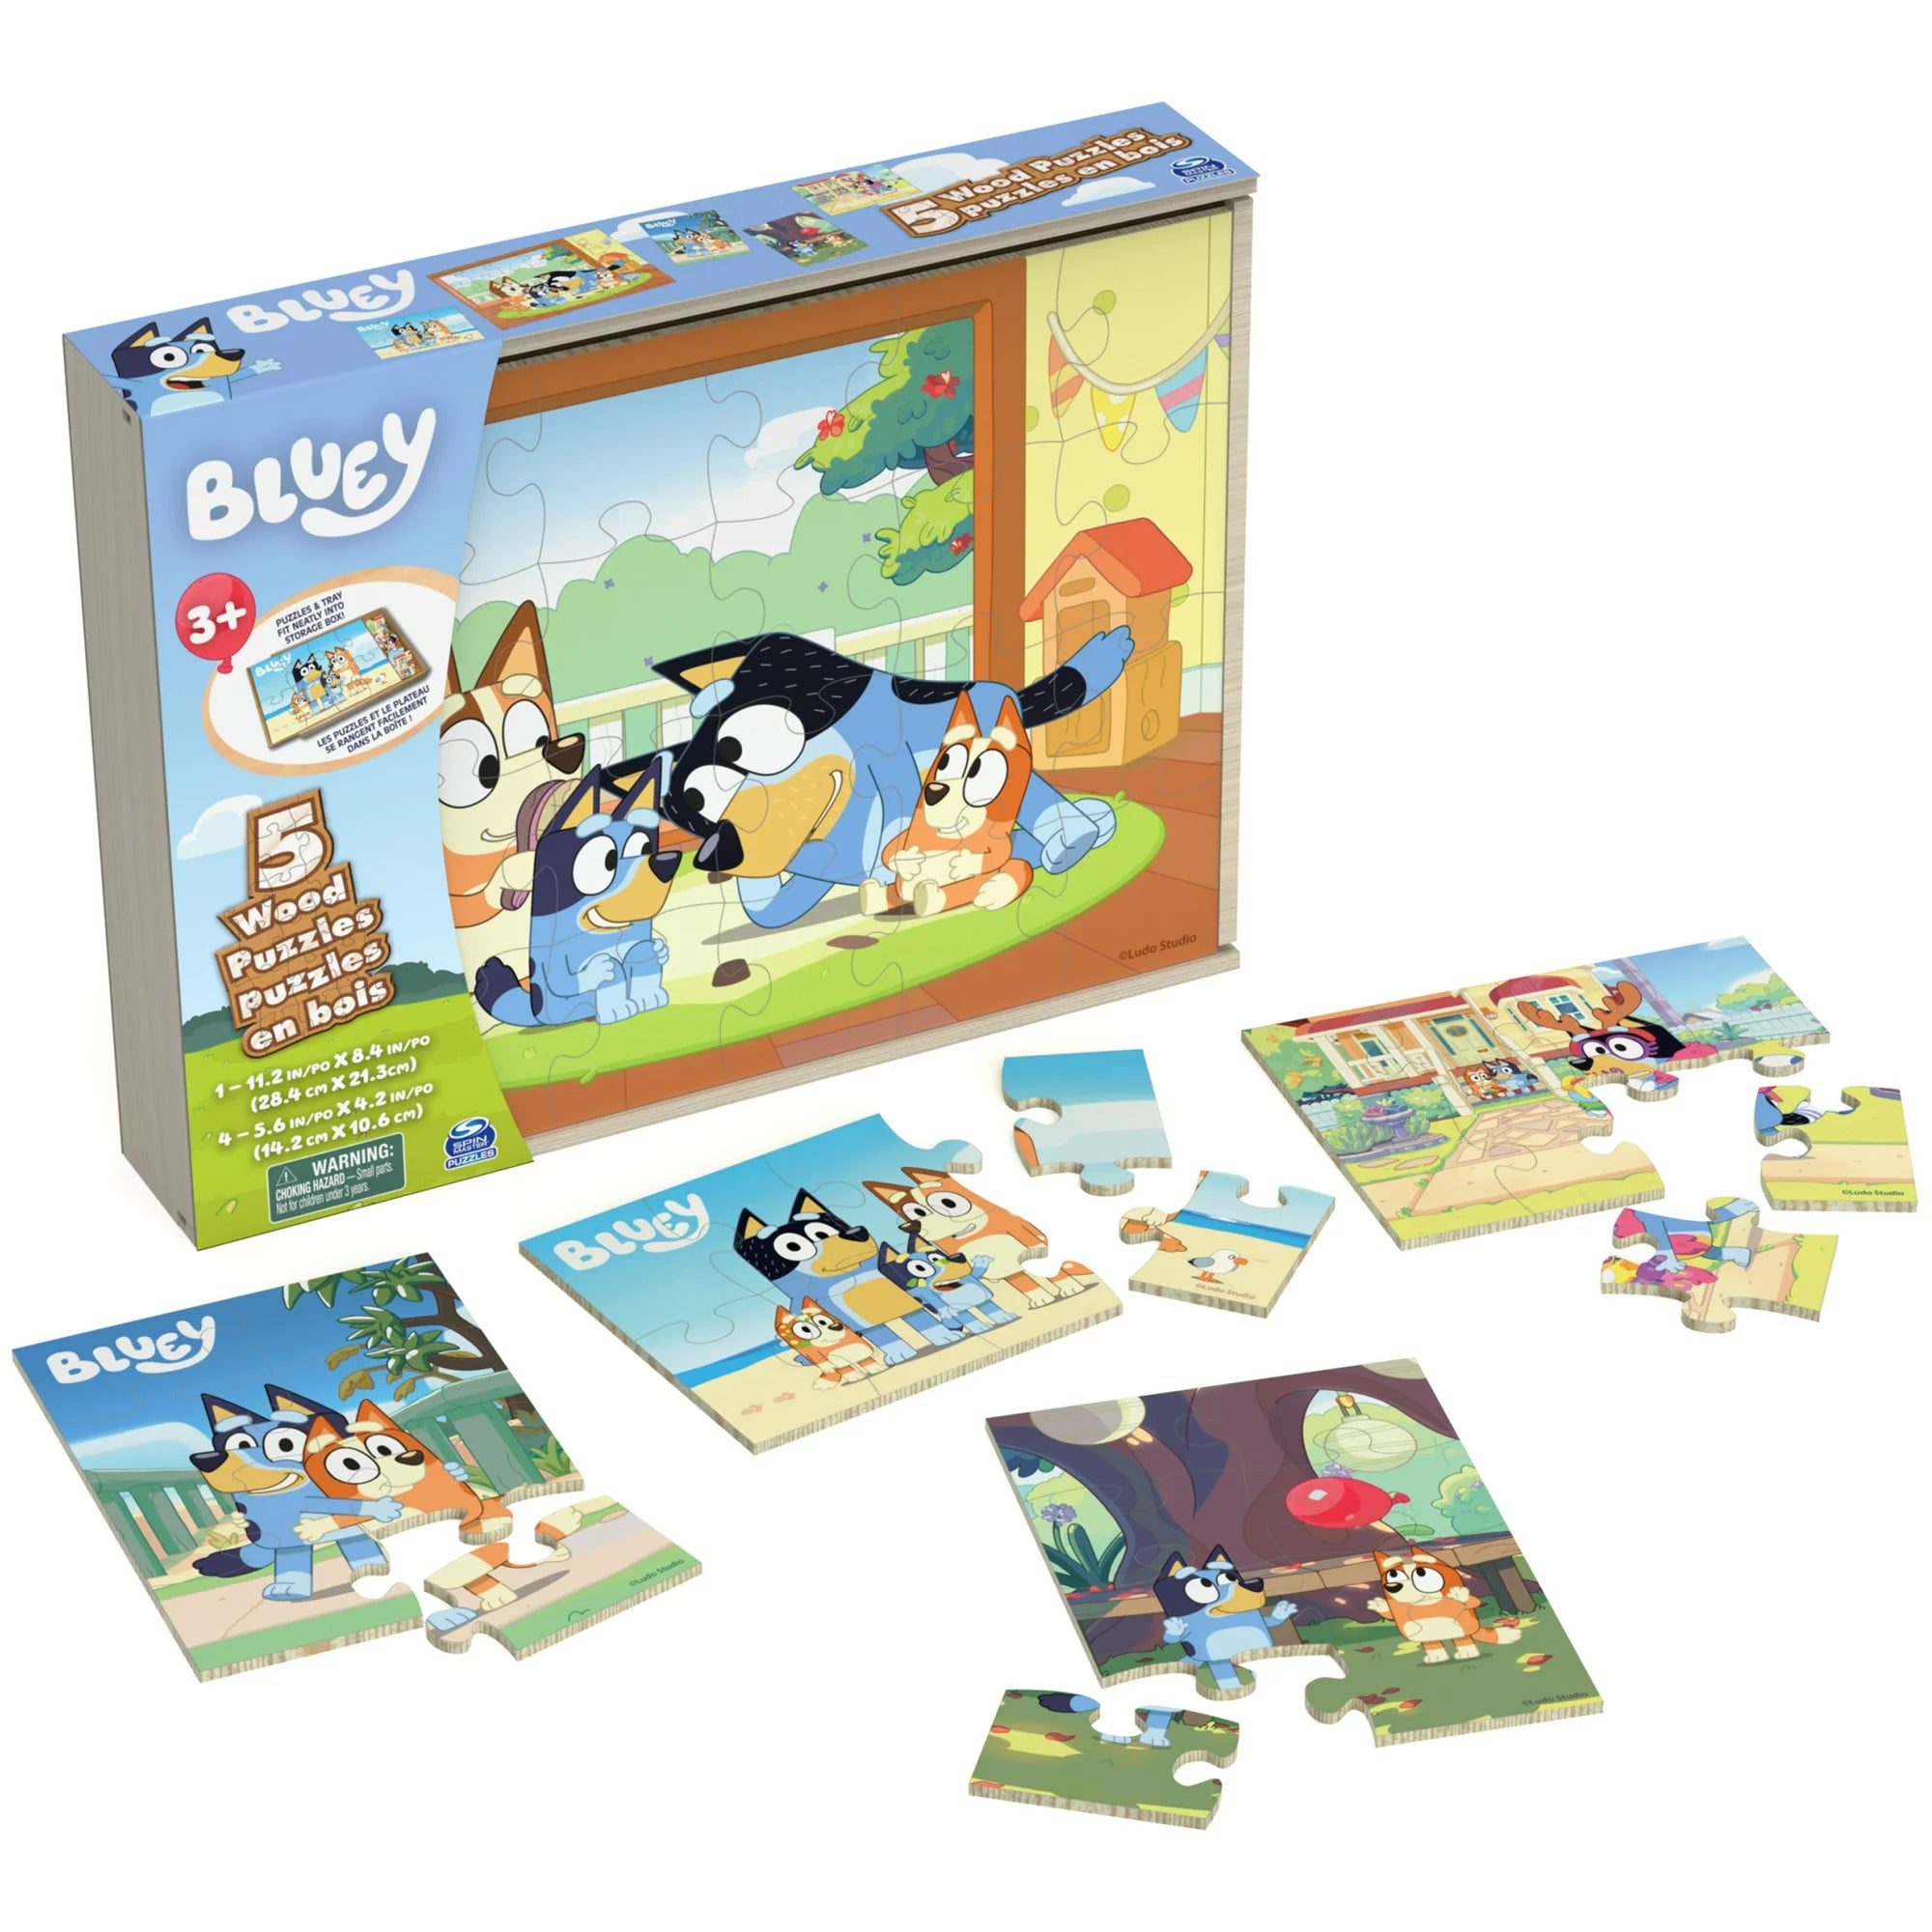 Bluey, 5 Wood Puzzles Jigsaw Bundle and Tray